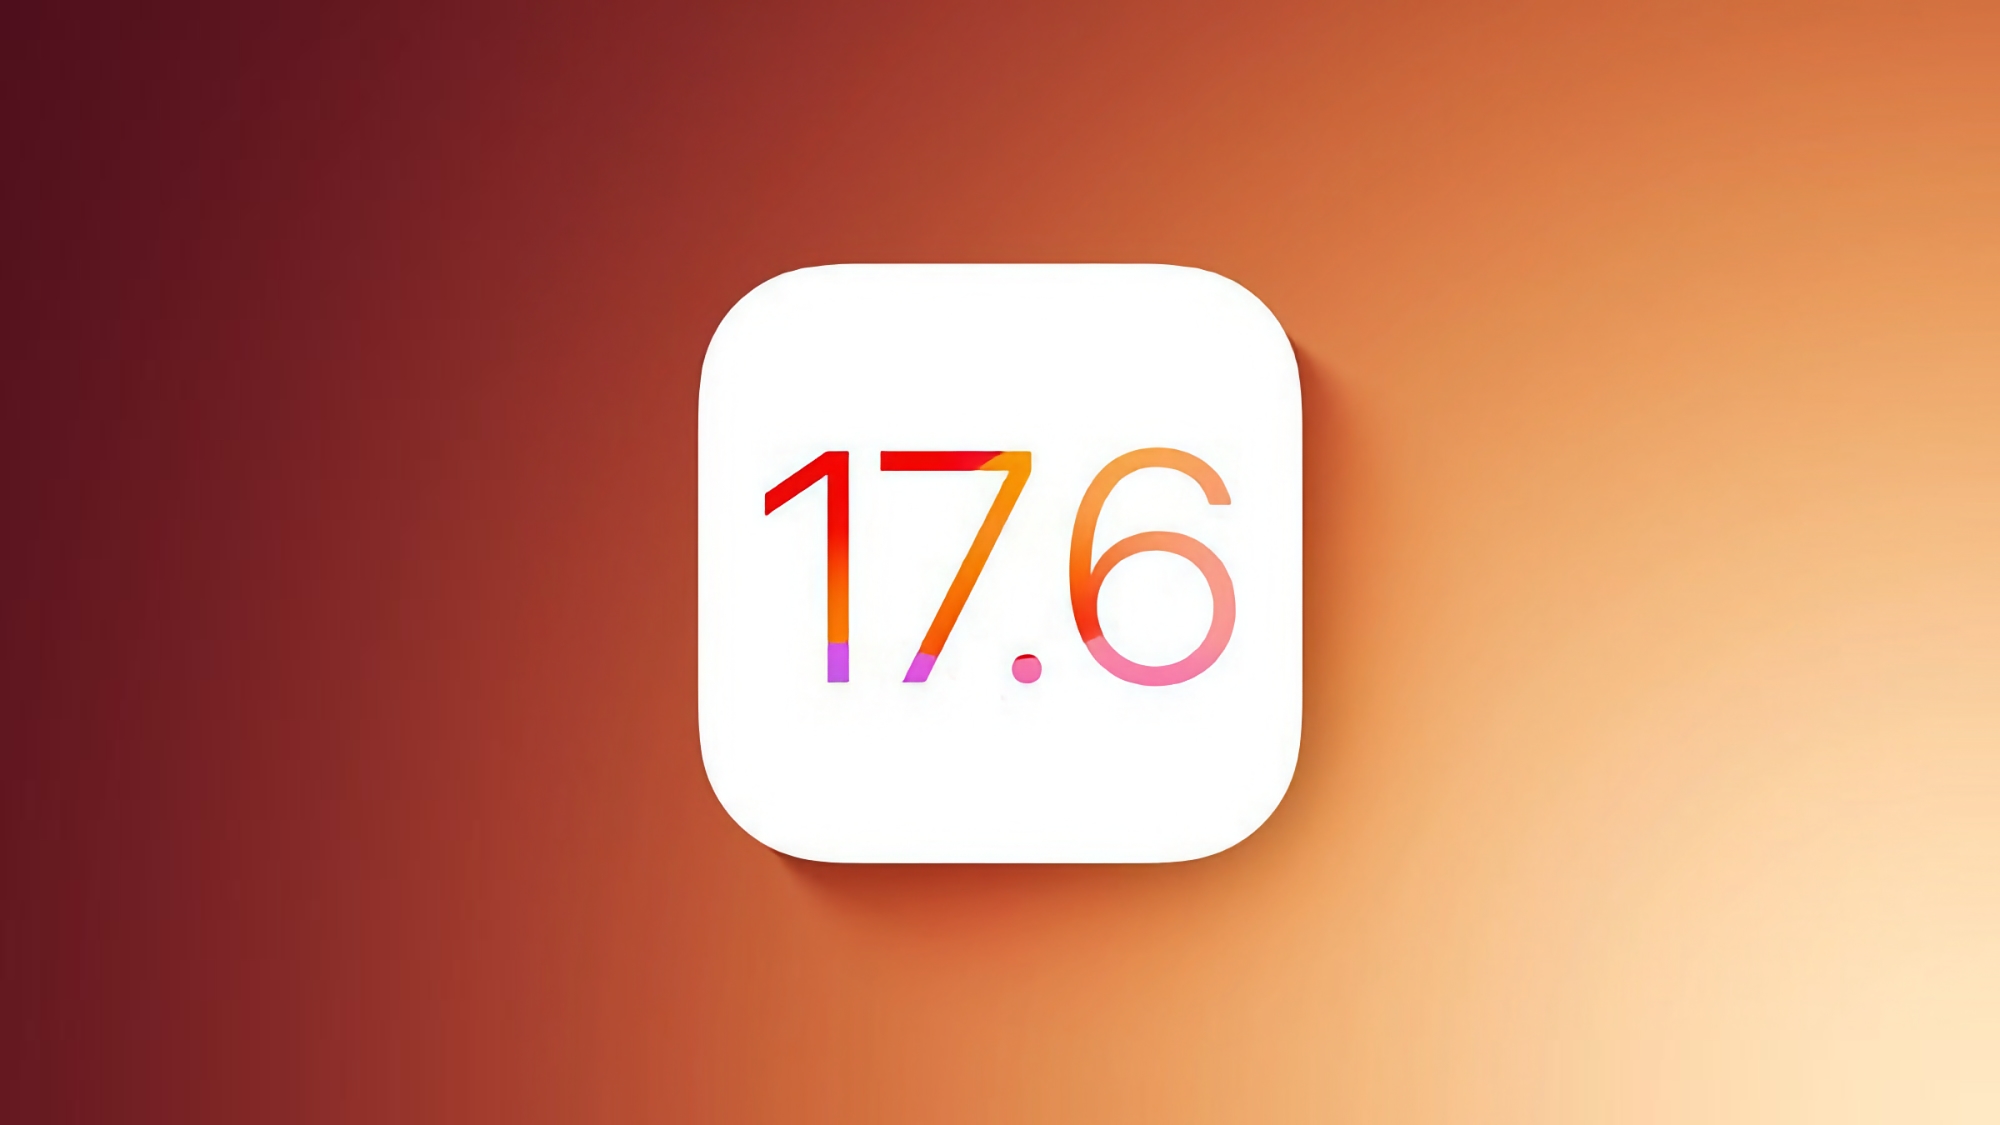 Following macOS Sonoma 14.6 Beta 3: Apple has released iOS 17.6 Beta 3